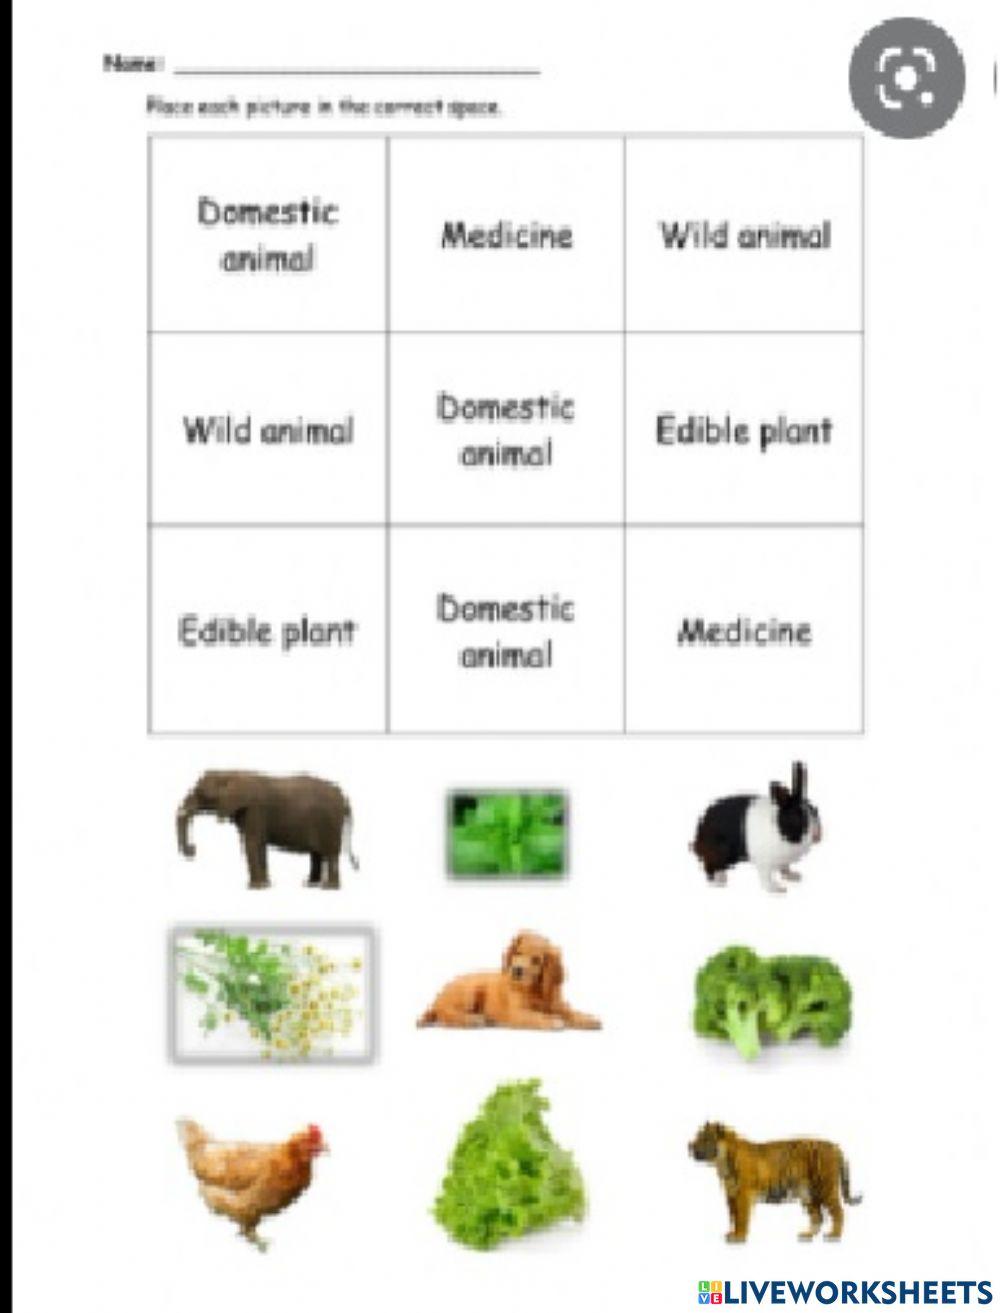 Plants and animals